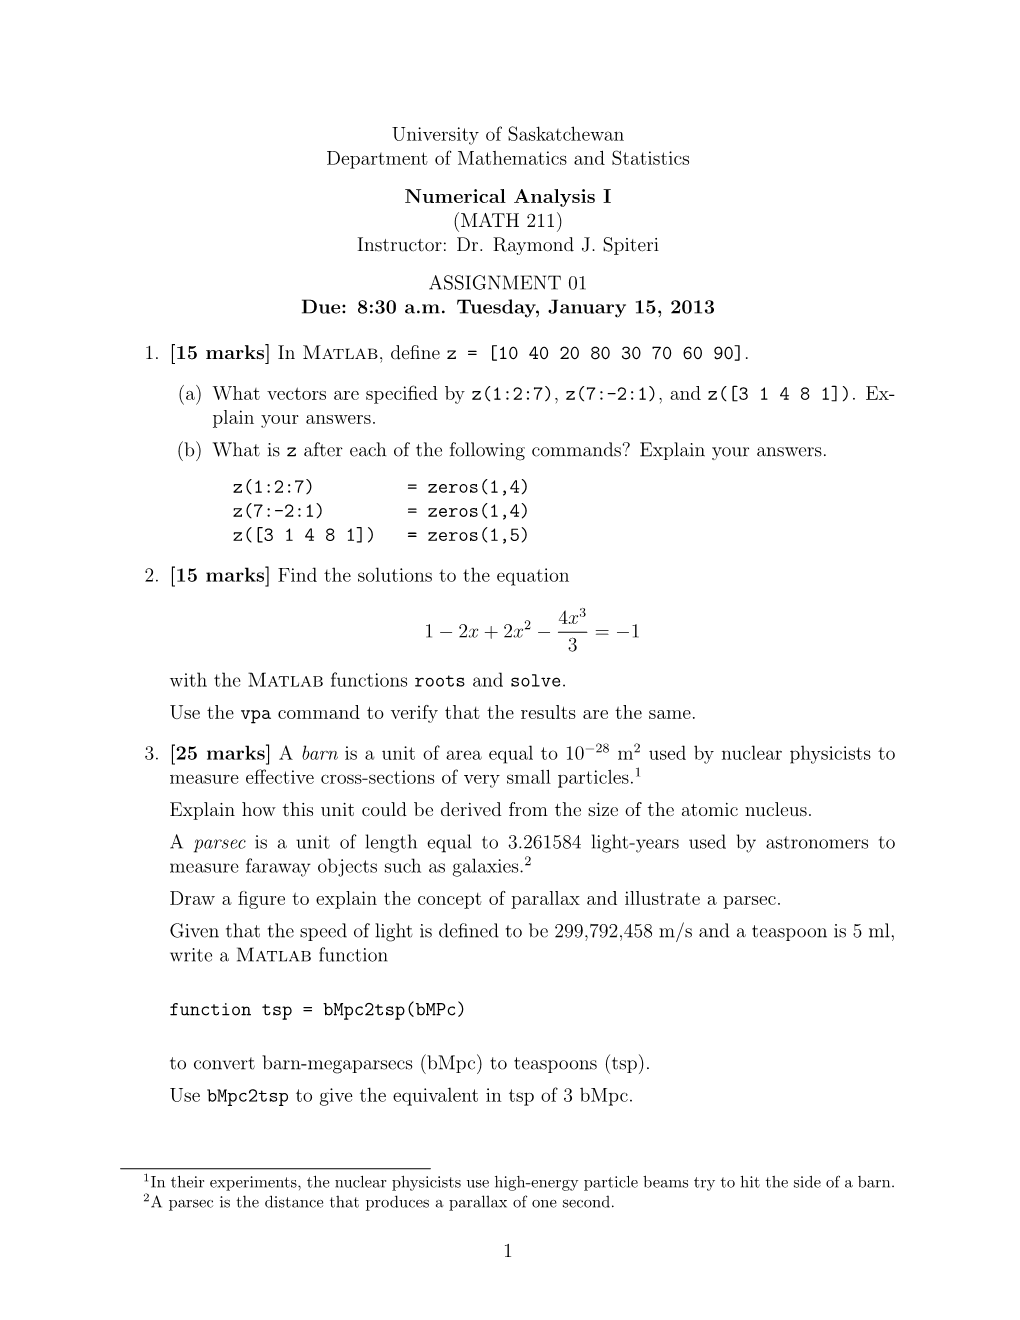 Mathematics and Statistics Numerical Analysis I (MATH 211) Instructor: Dr